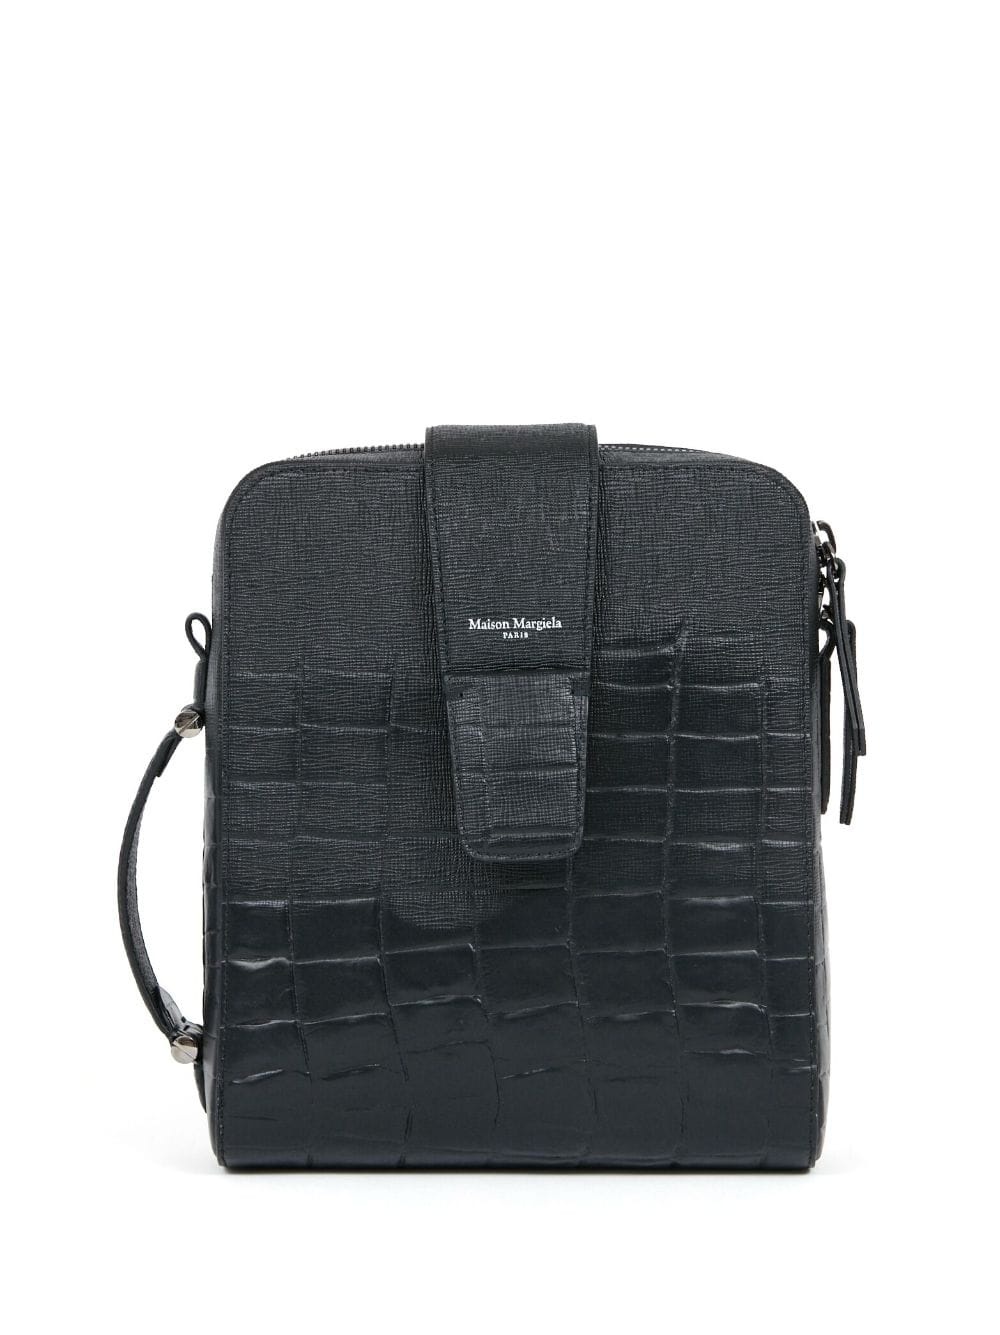 four-stitch leather shoulder bag - 1